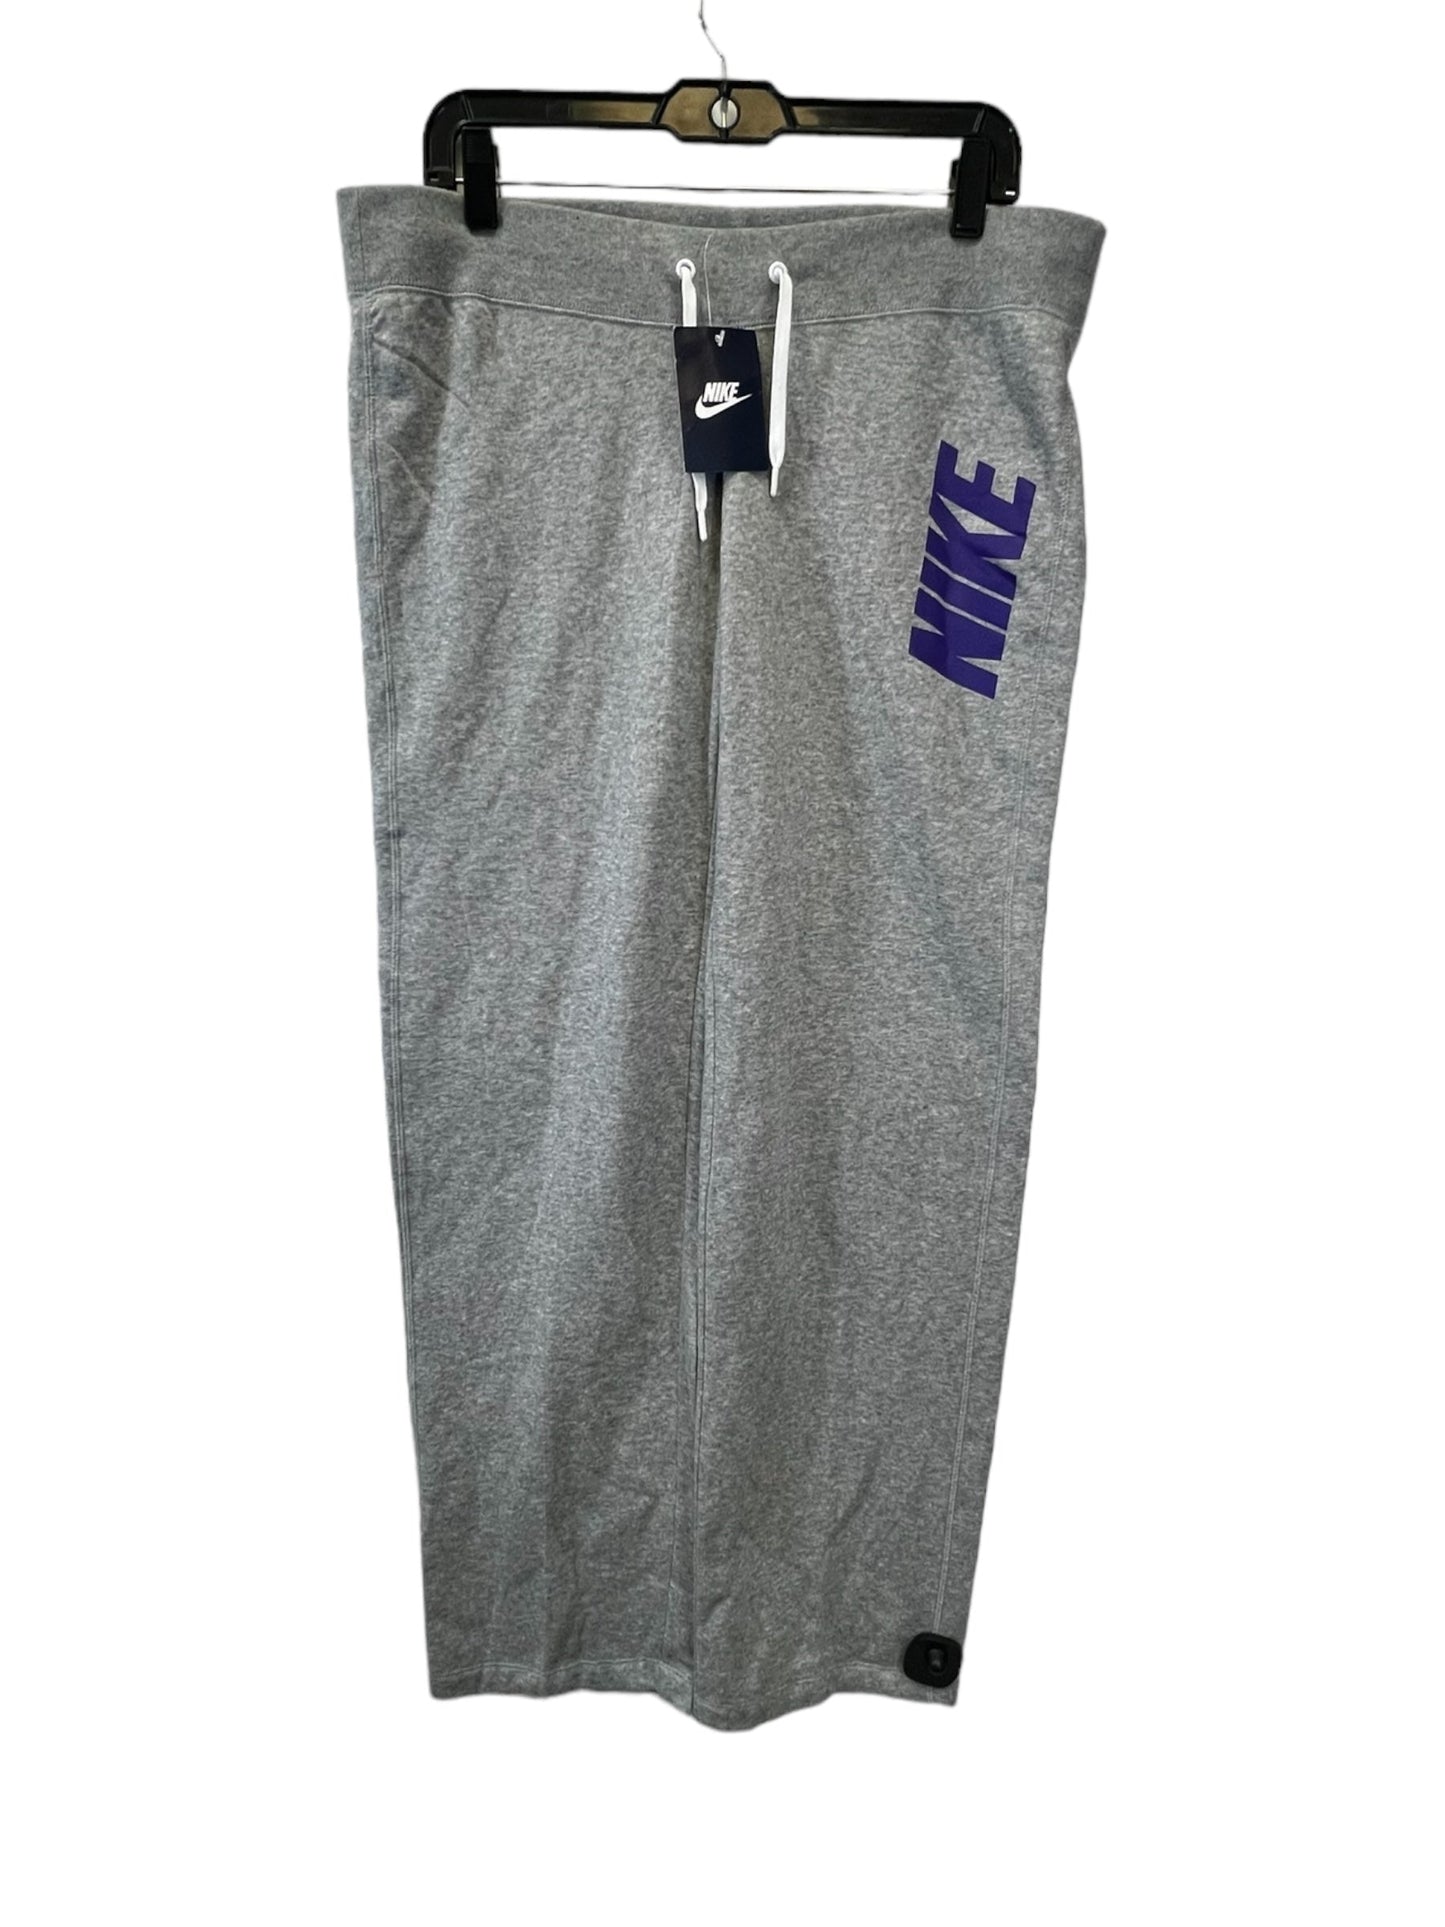 Grey Athletic Pants Nike Apparel, Size L